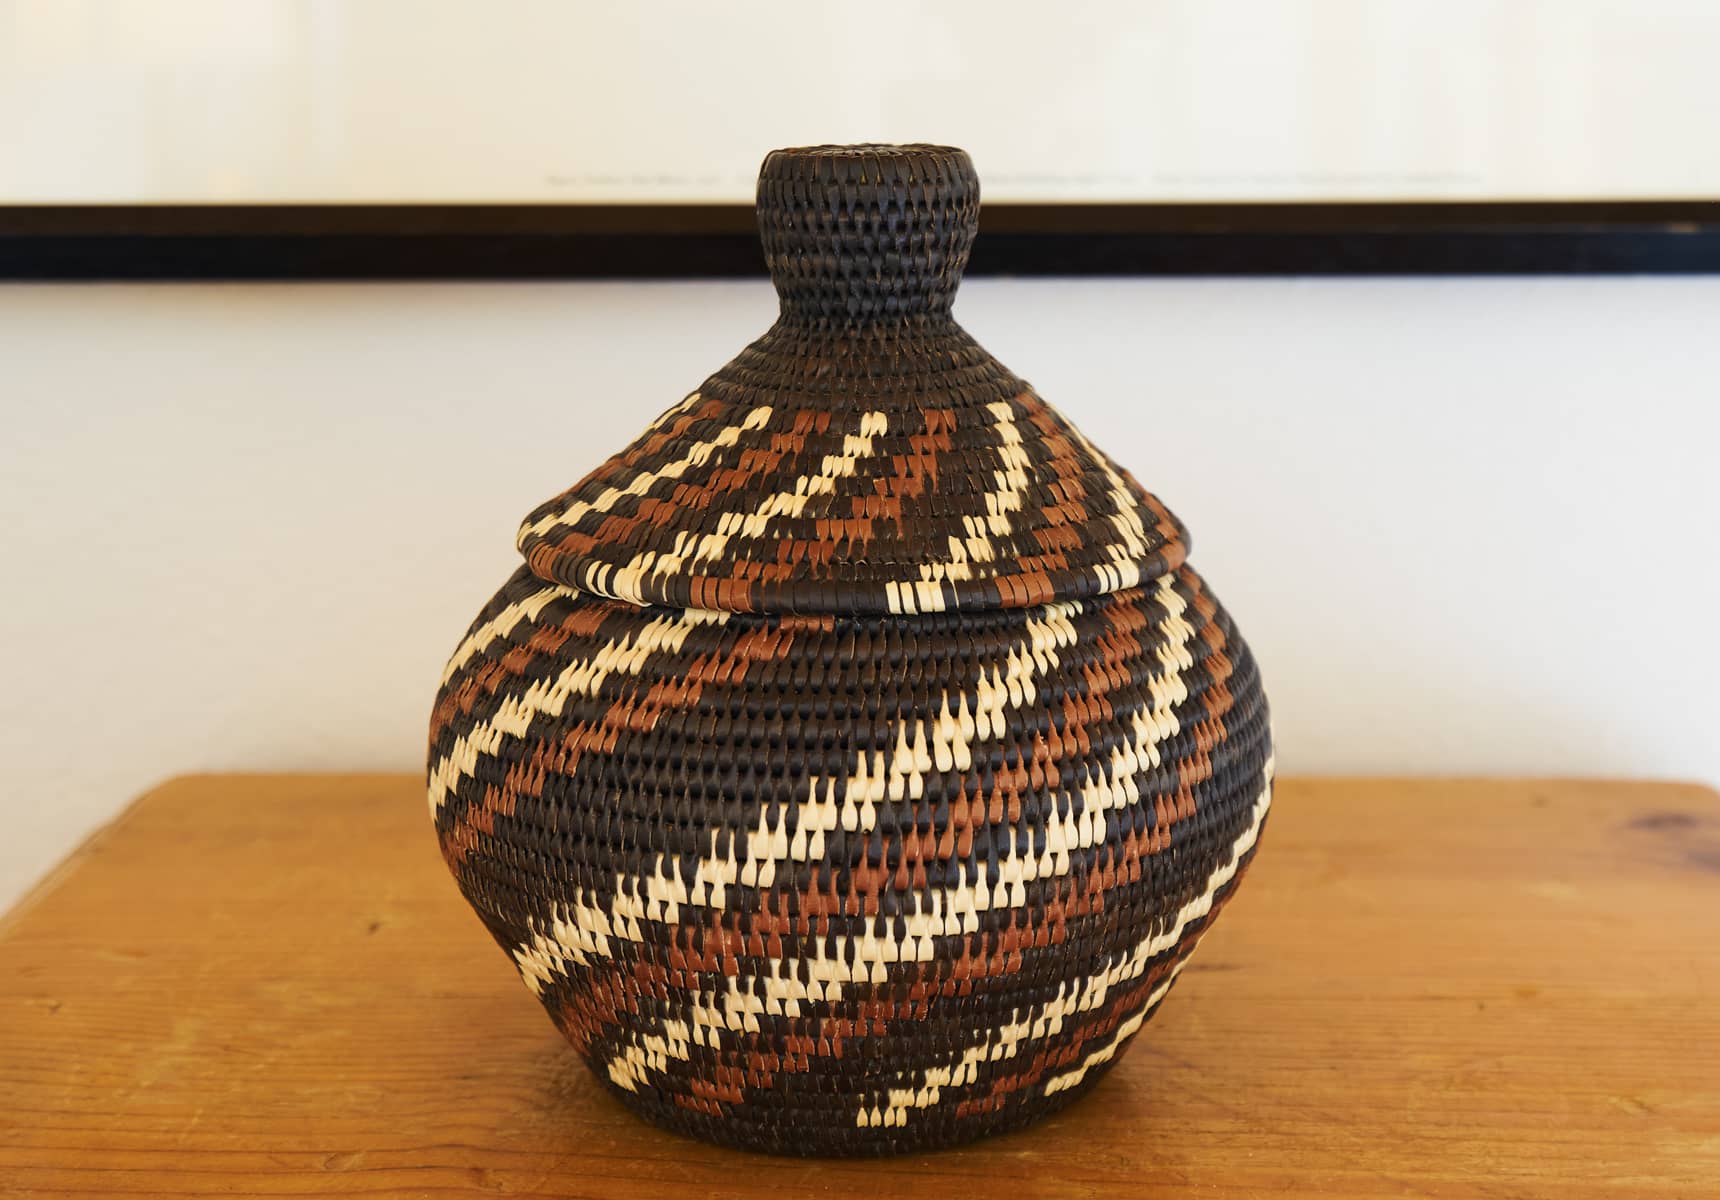 A small decorative woven basket